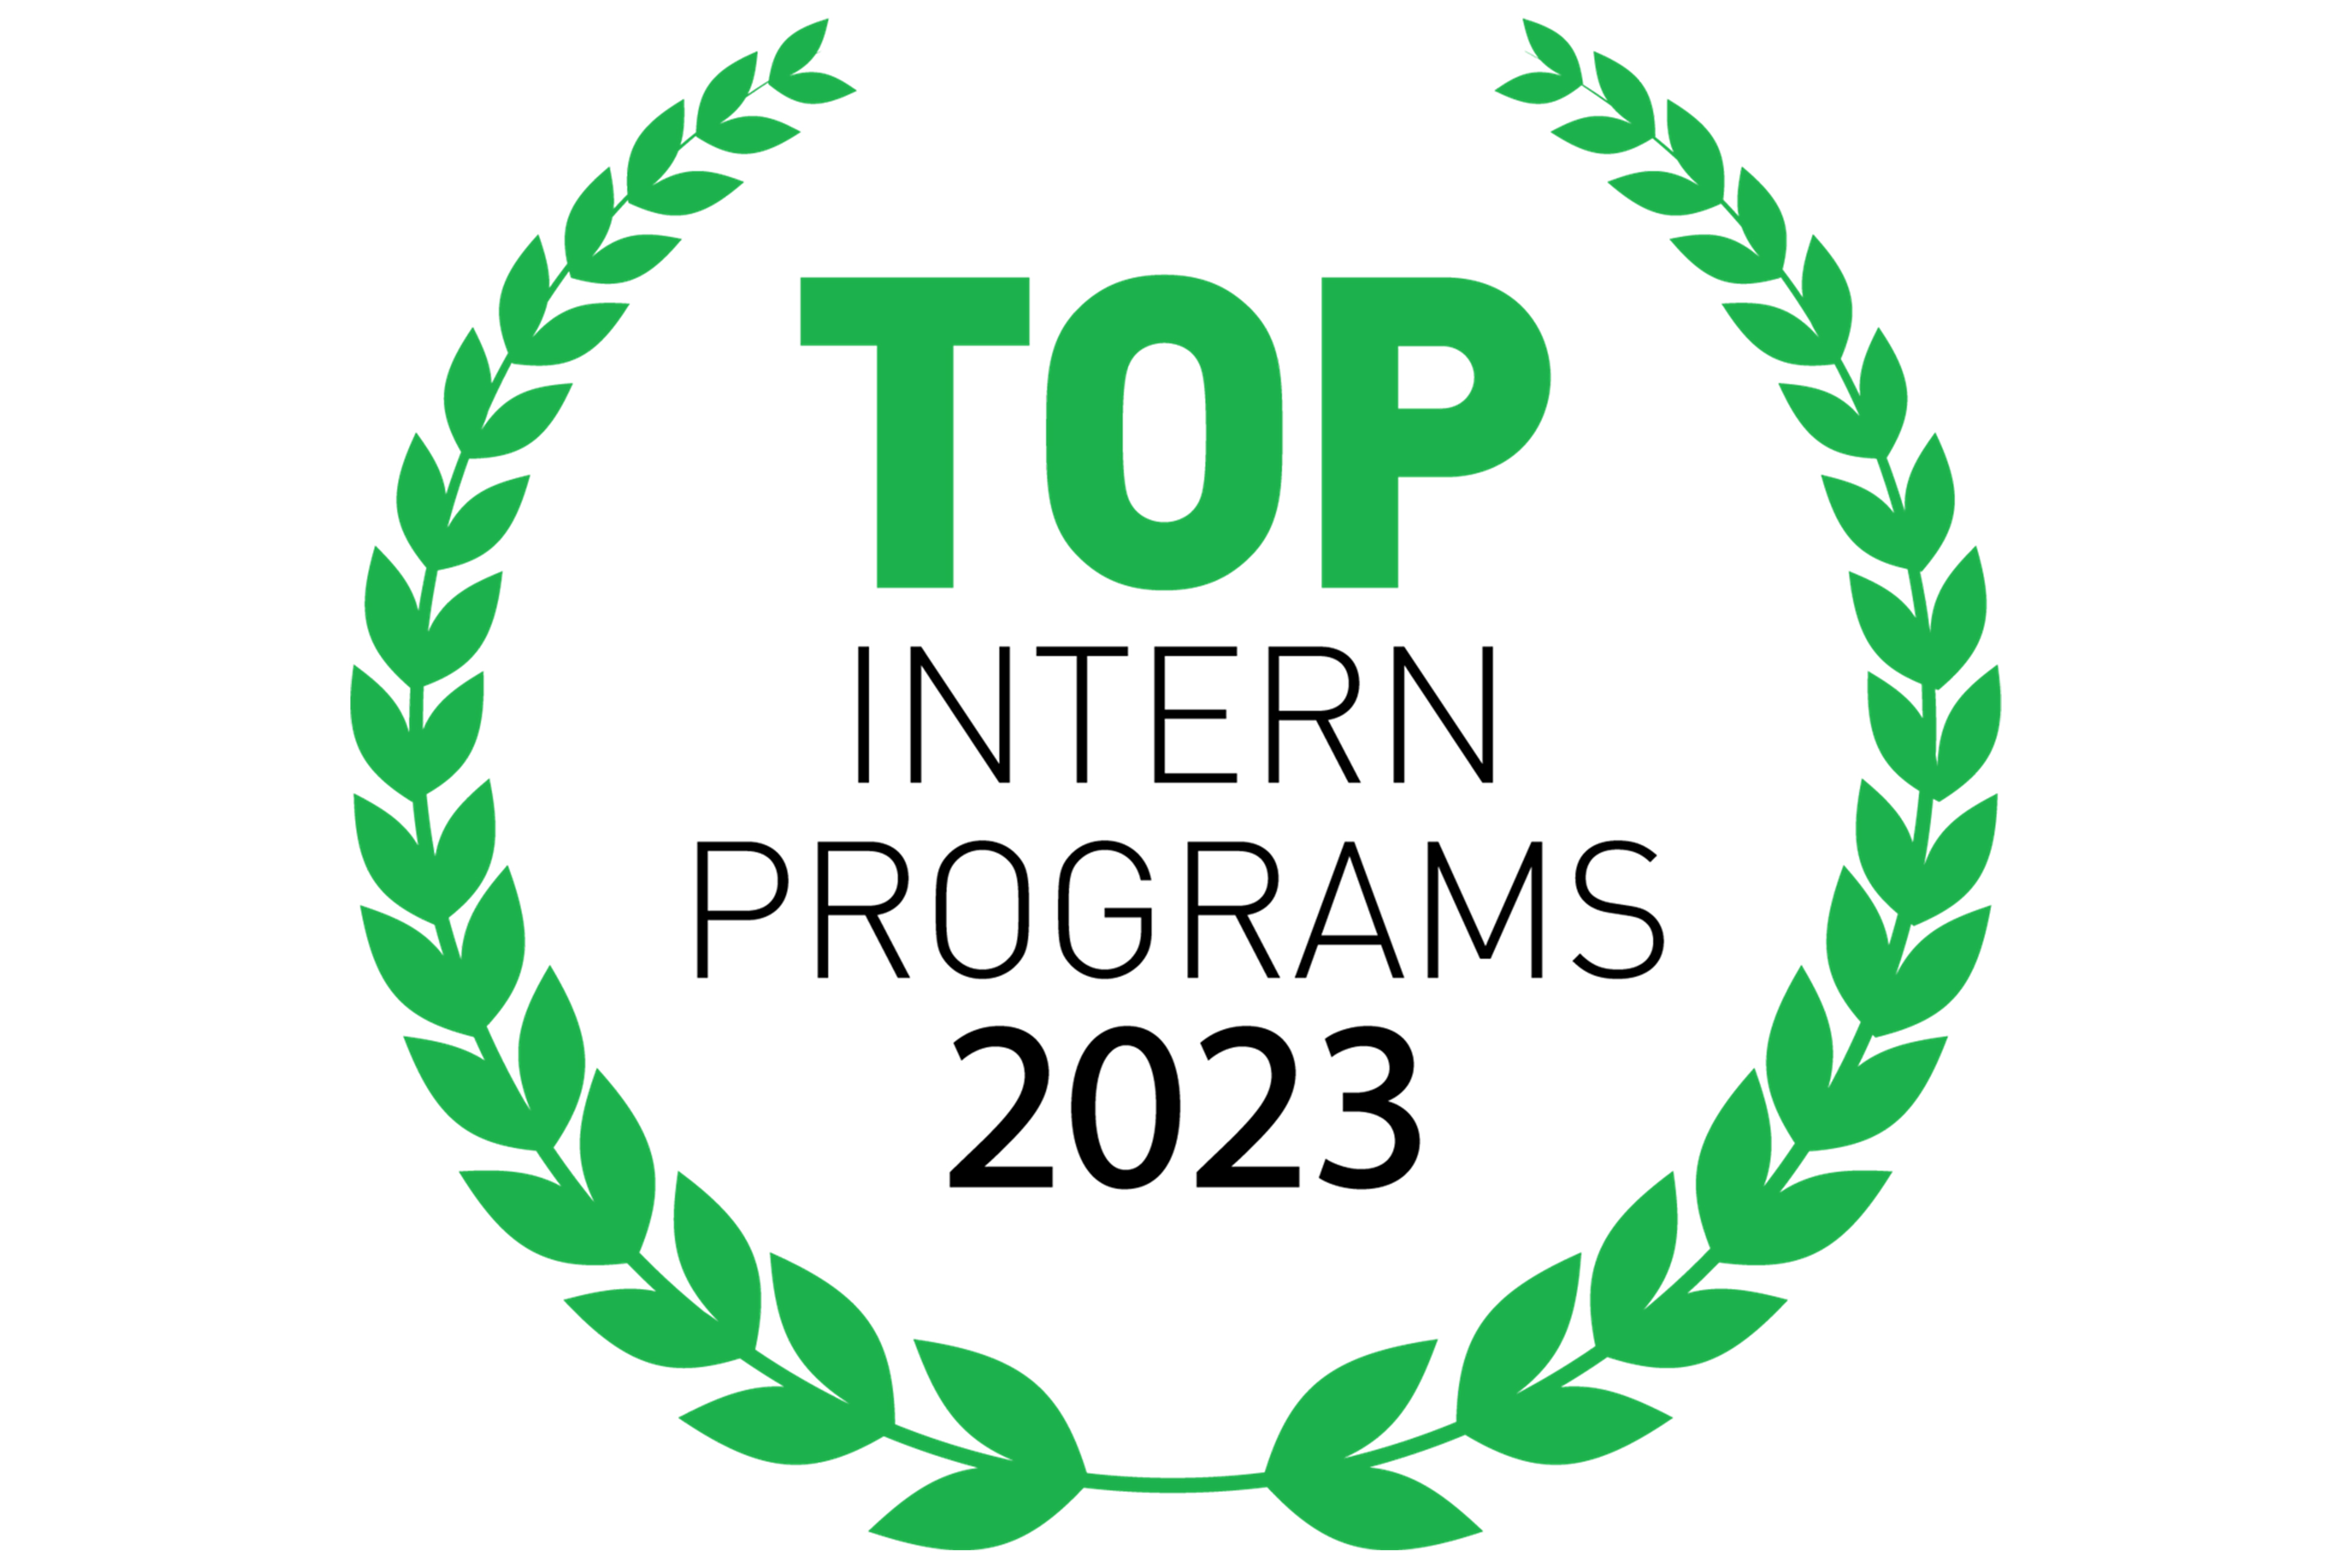 Top intern programs 2023